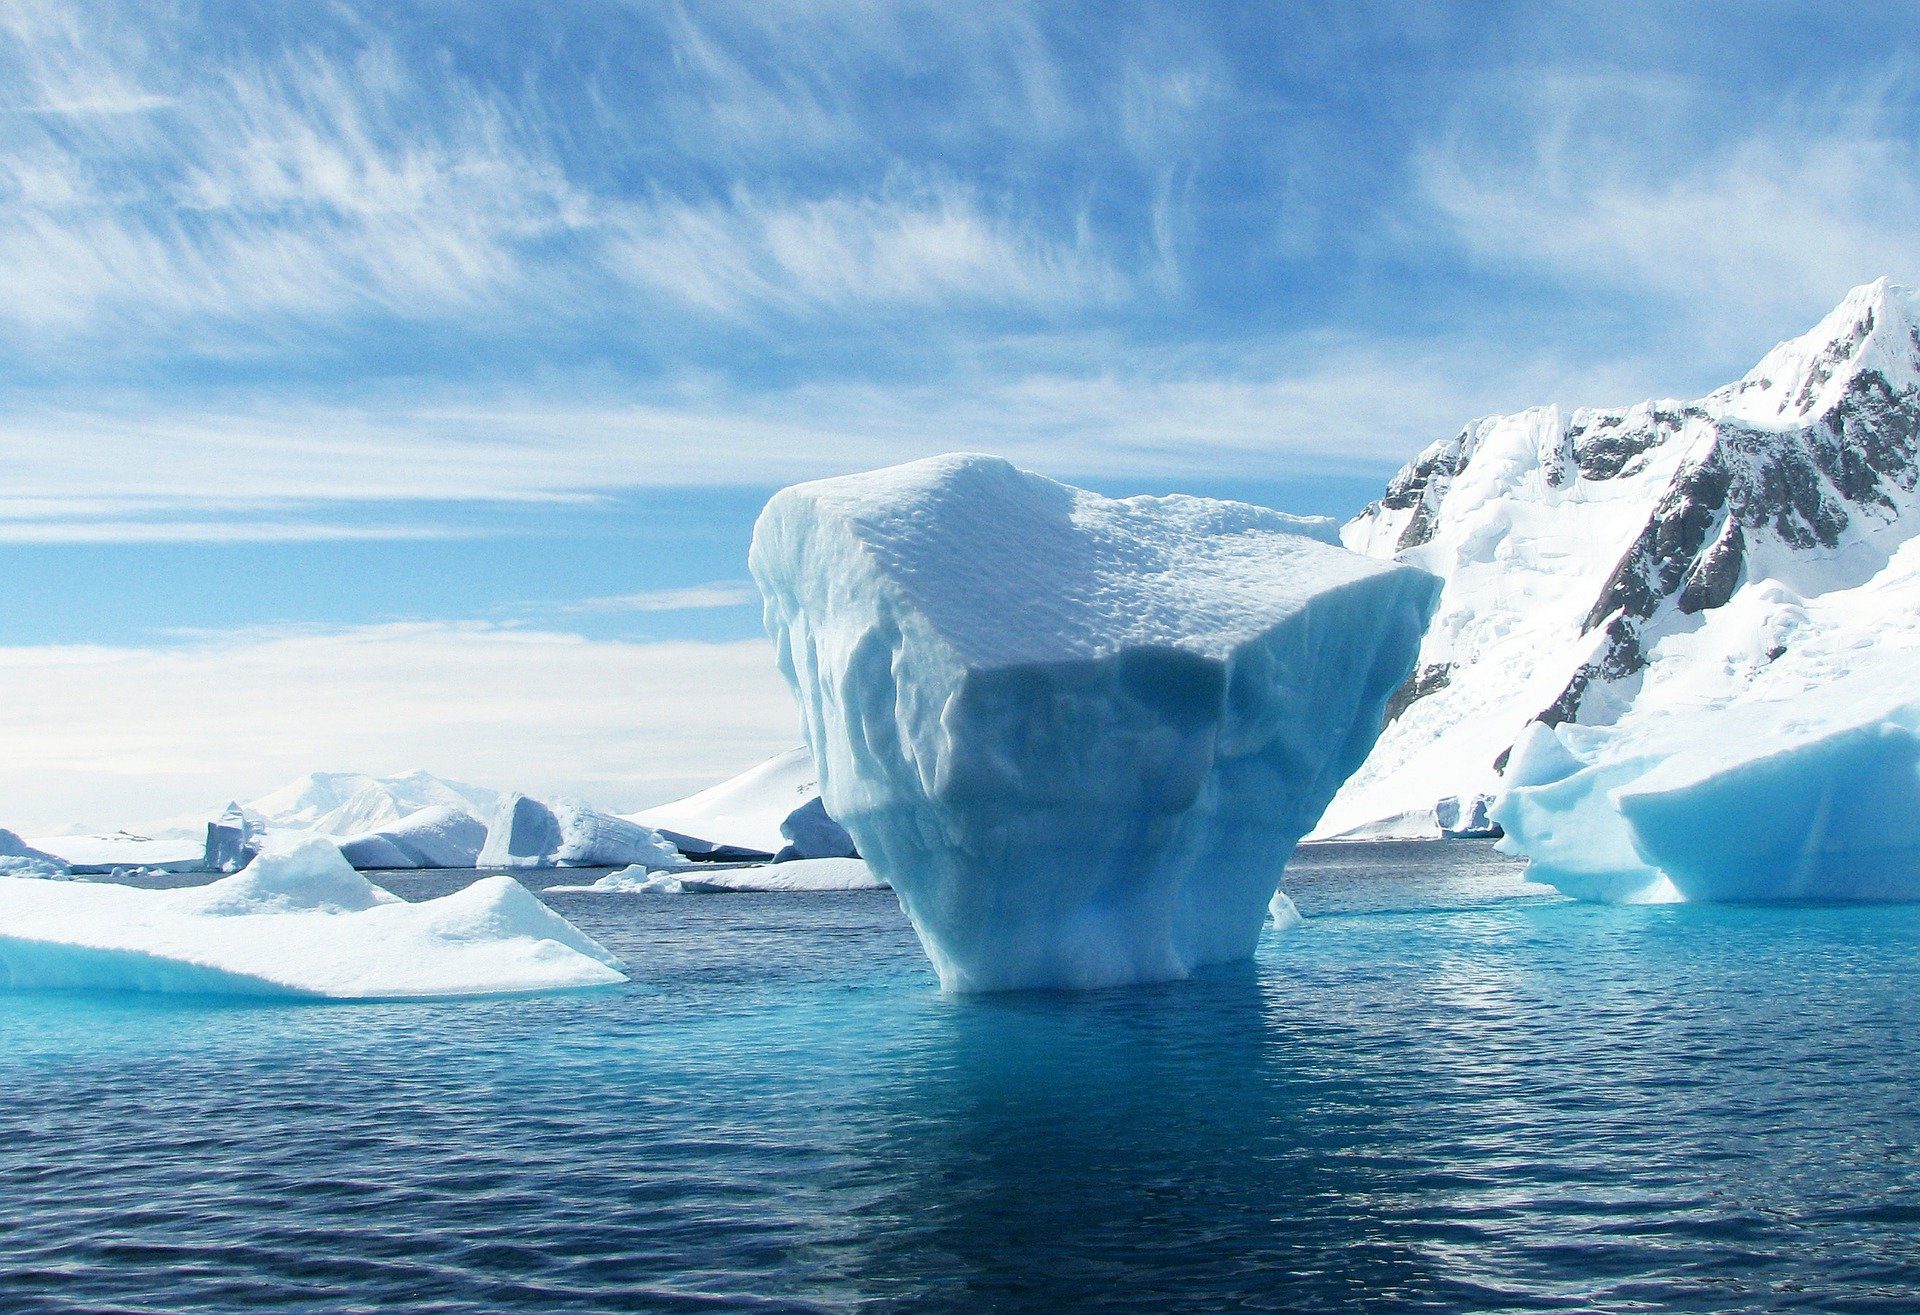 Glaciers and Icebergs in Antarctica